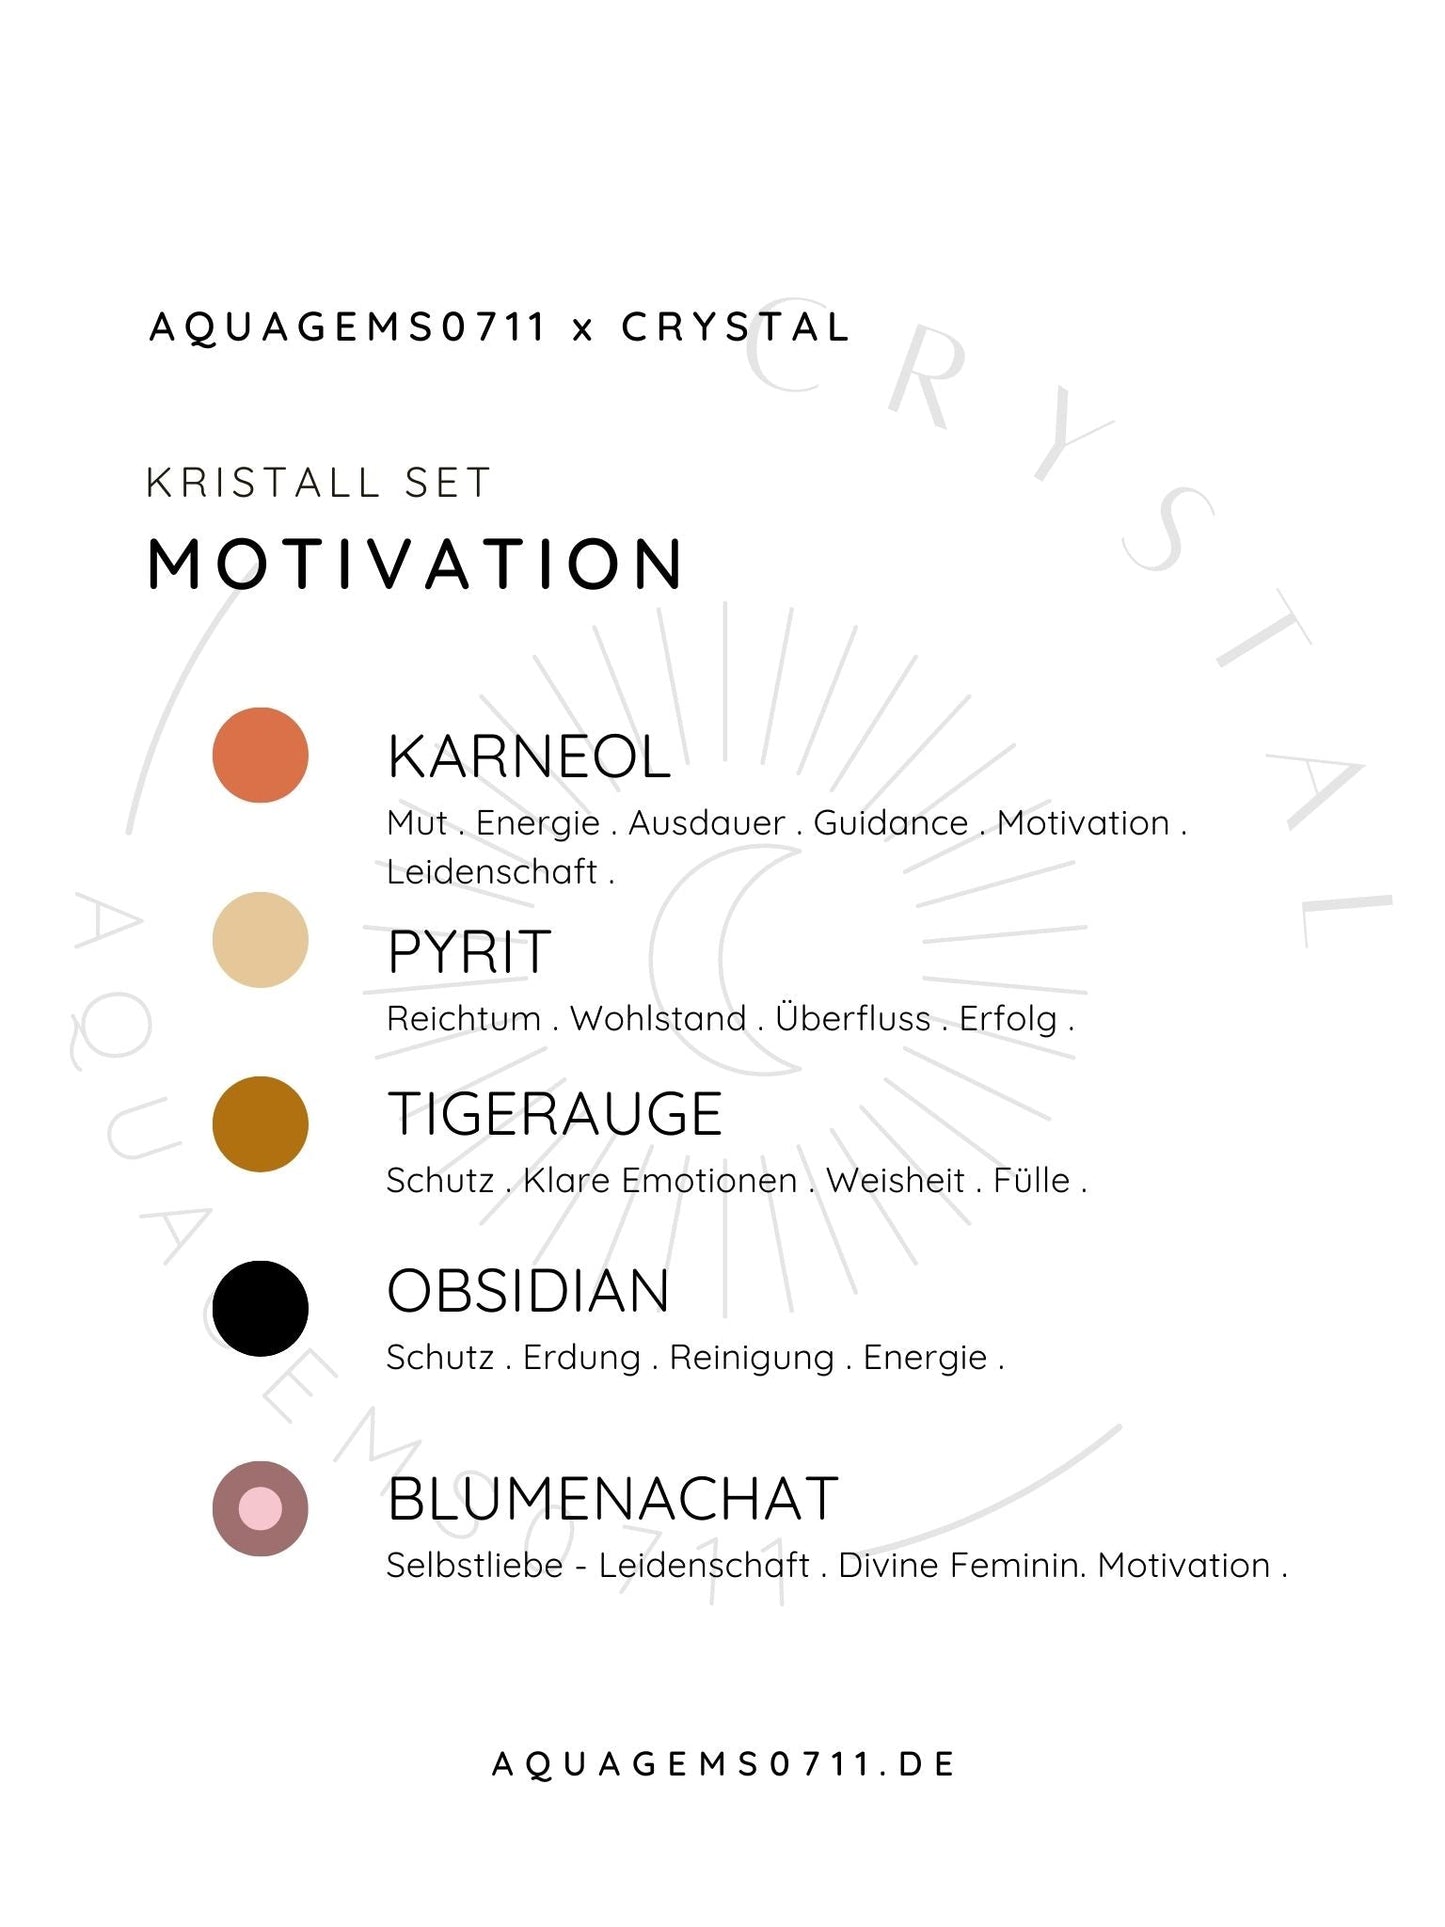 Kristall Set Motivation . CRYSTAL KIT MOTIVATION . Karneol . Pyrit . Tigerauge . Obsidian . Blumenachat